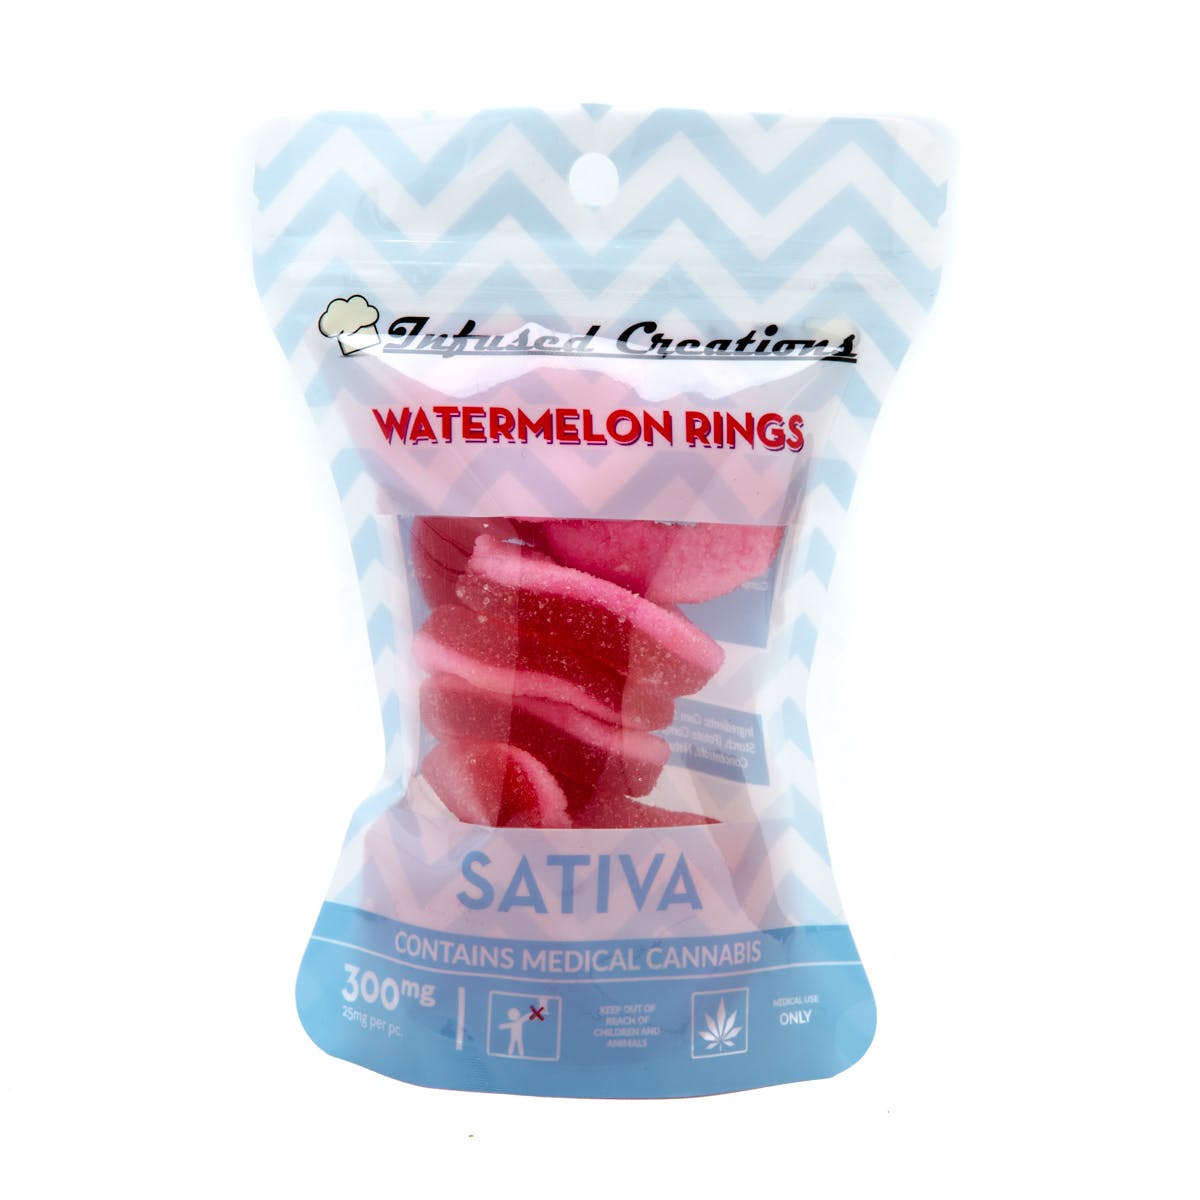 Watermelon Rings Sativa, 300mg